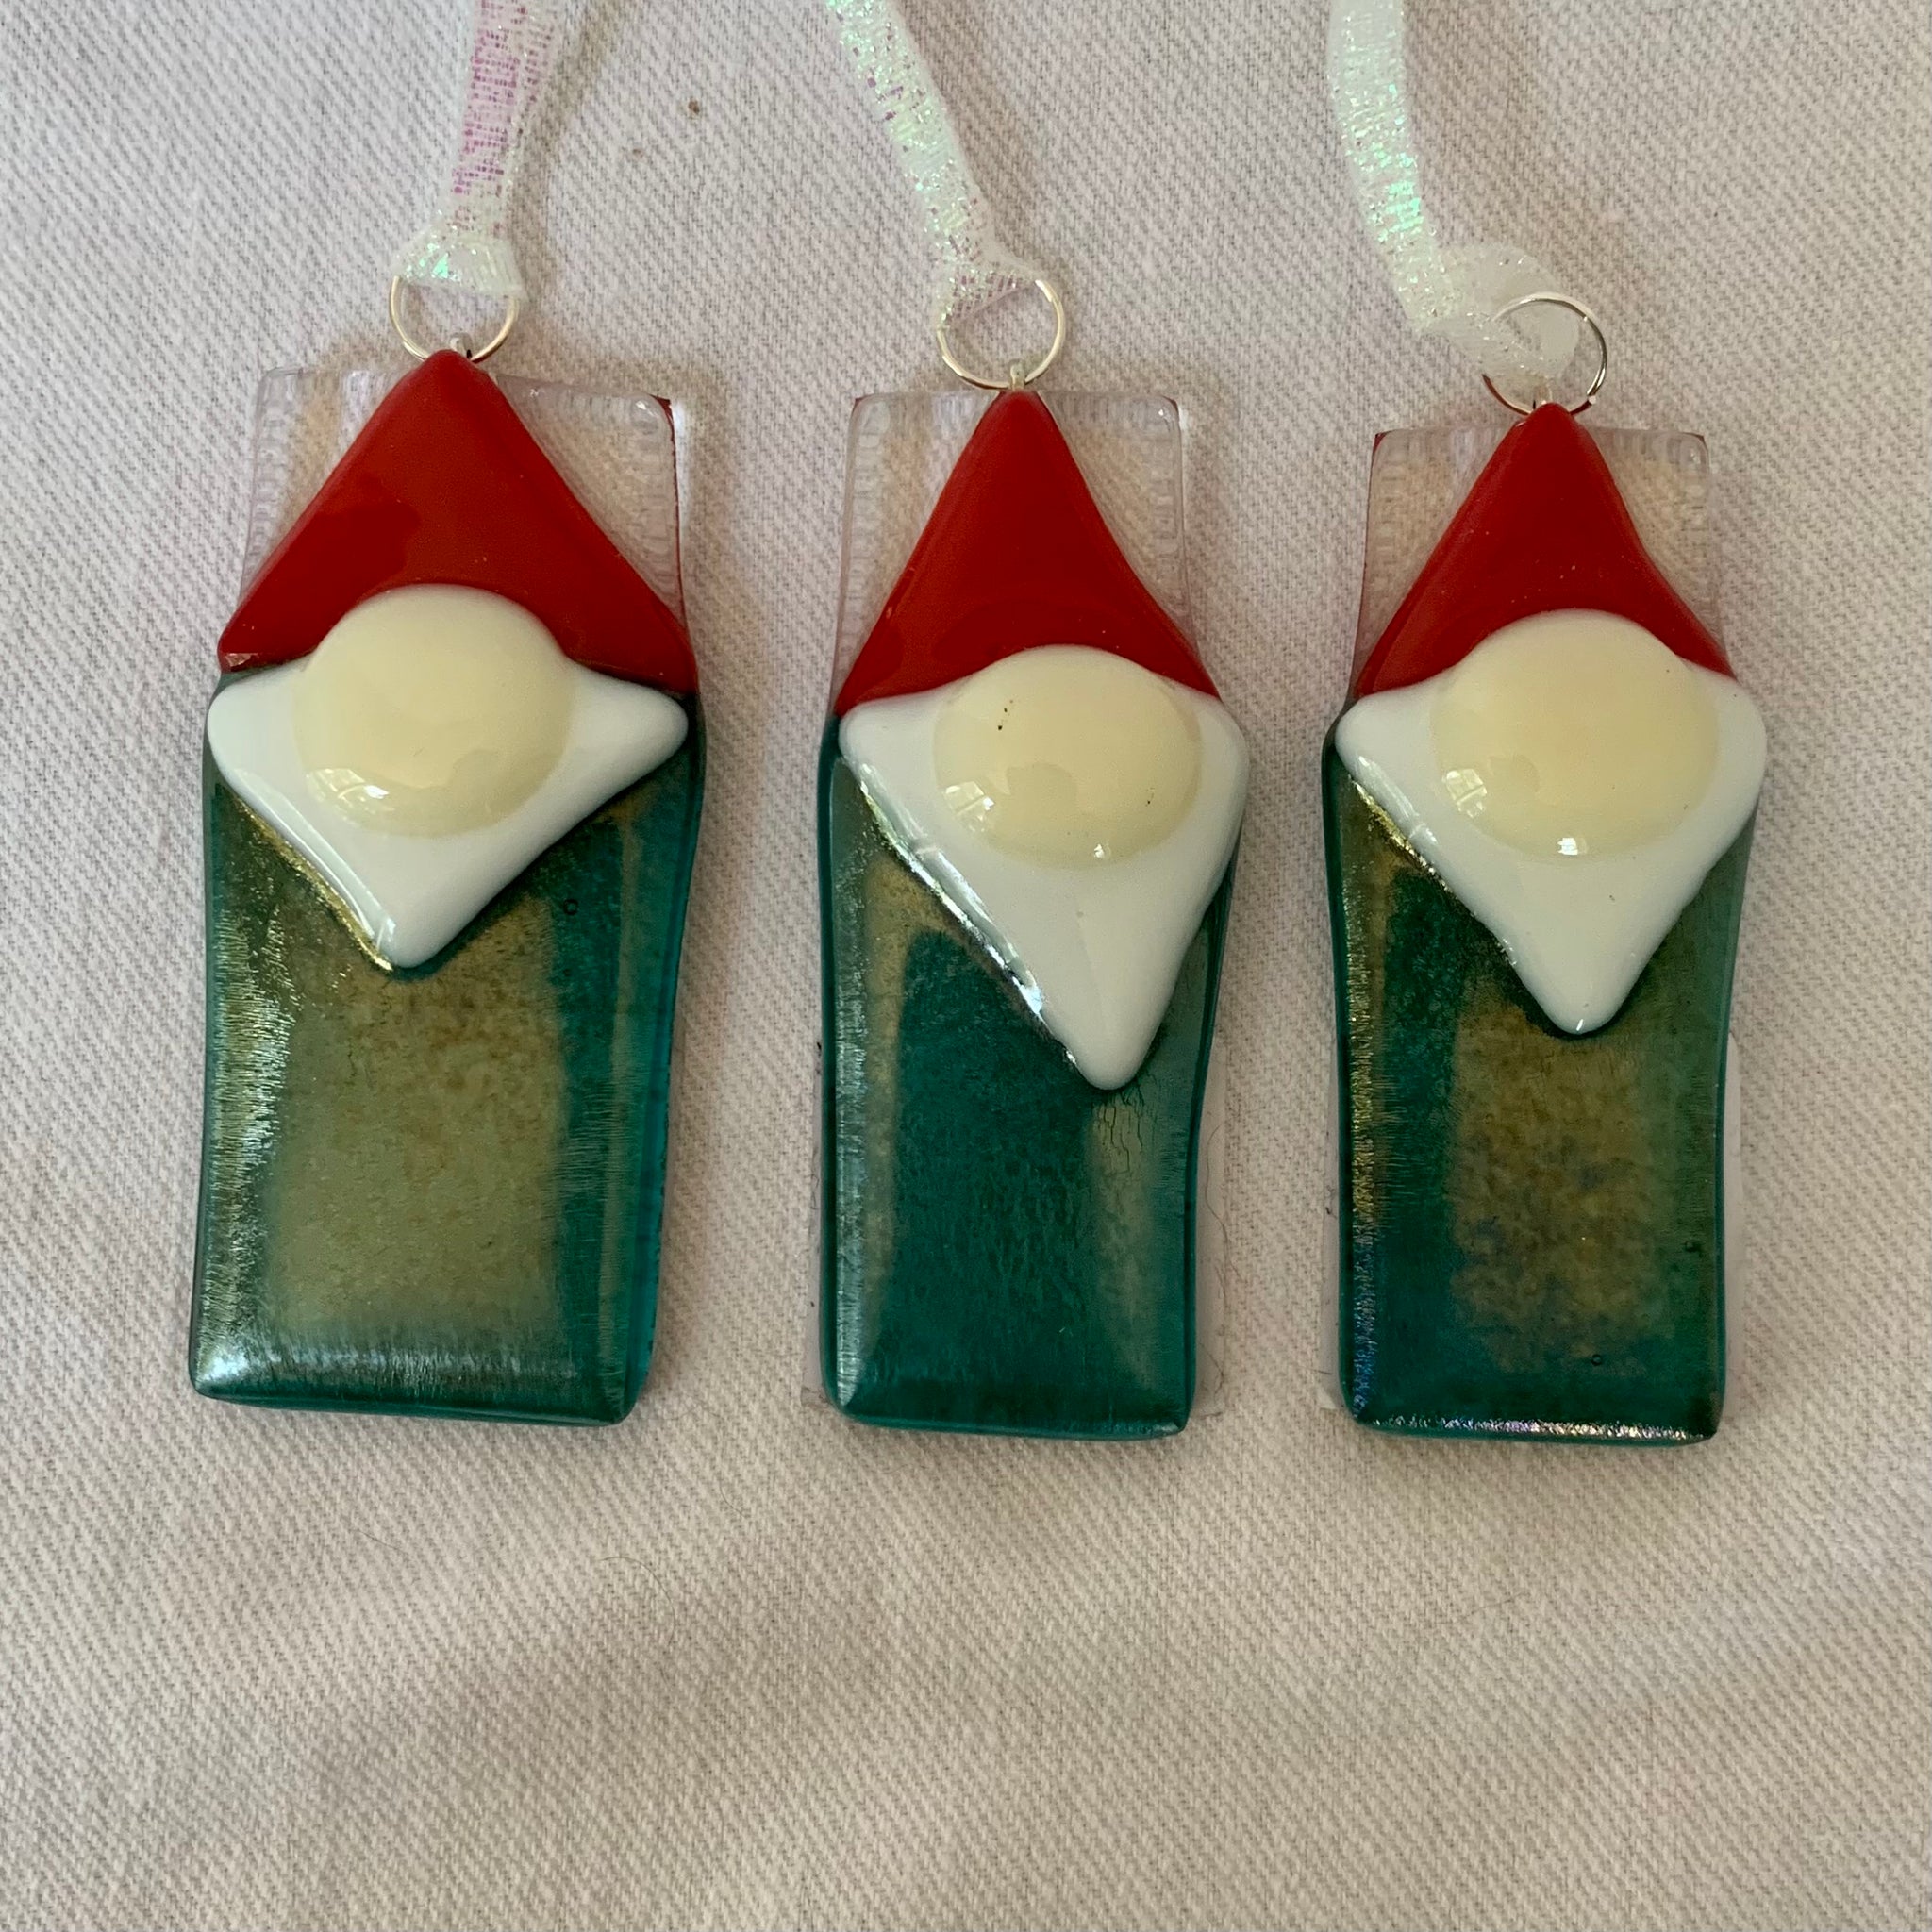 Transparent green iridized gnome ornaments